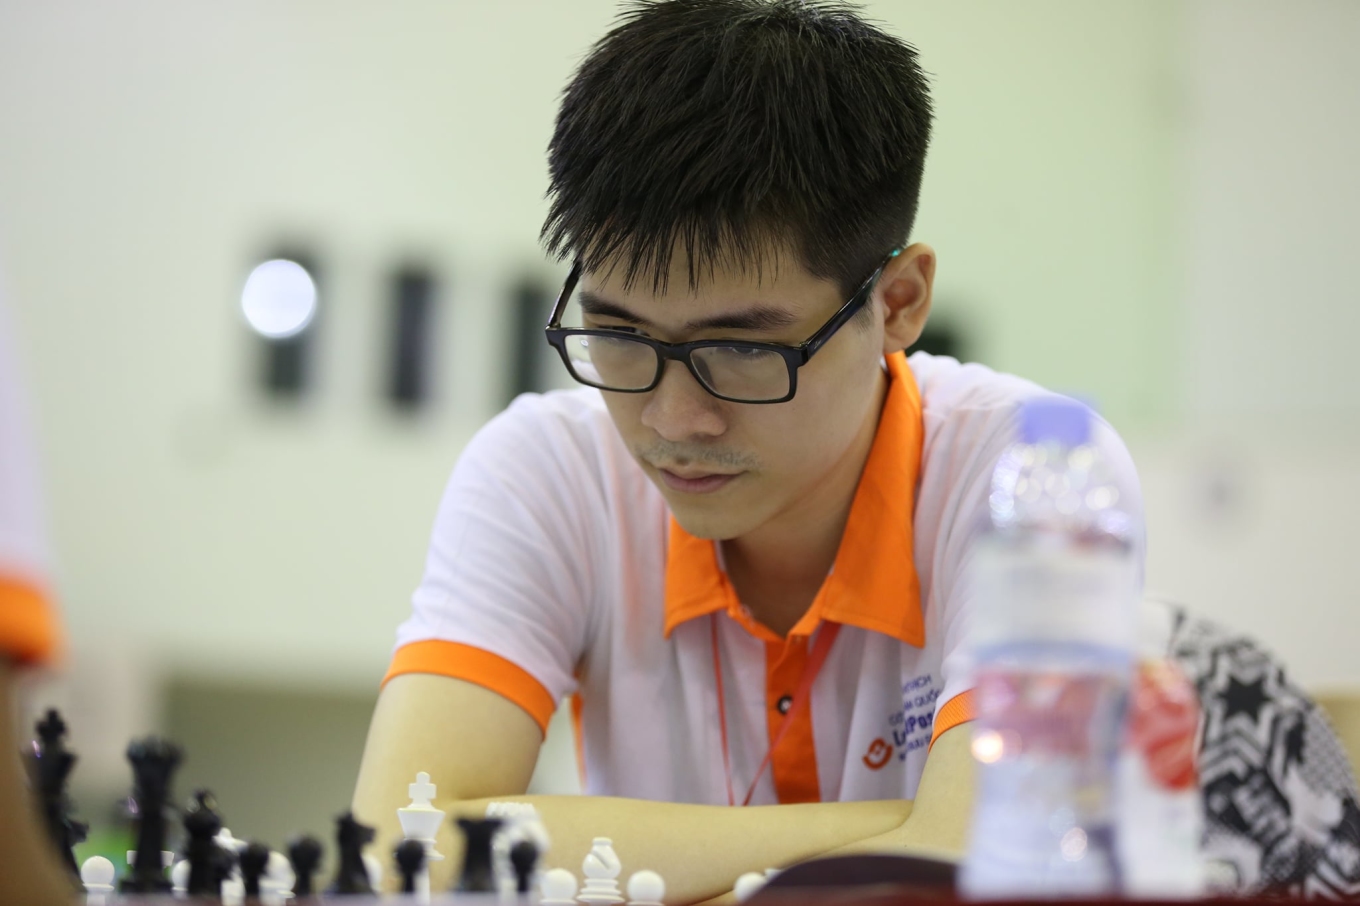 Le Tuan Minh at the national chess championship in Hanoi, 2020. Photo by VnExpress/Xuan Binh